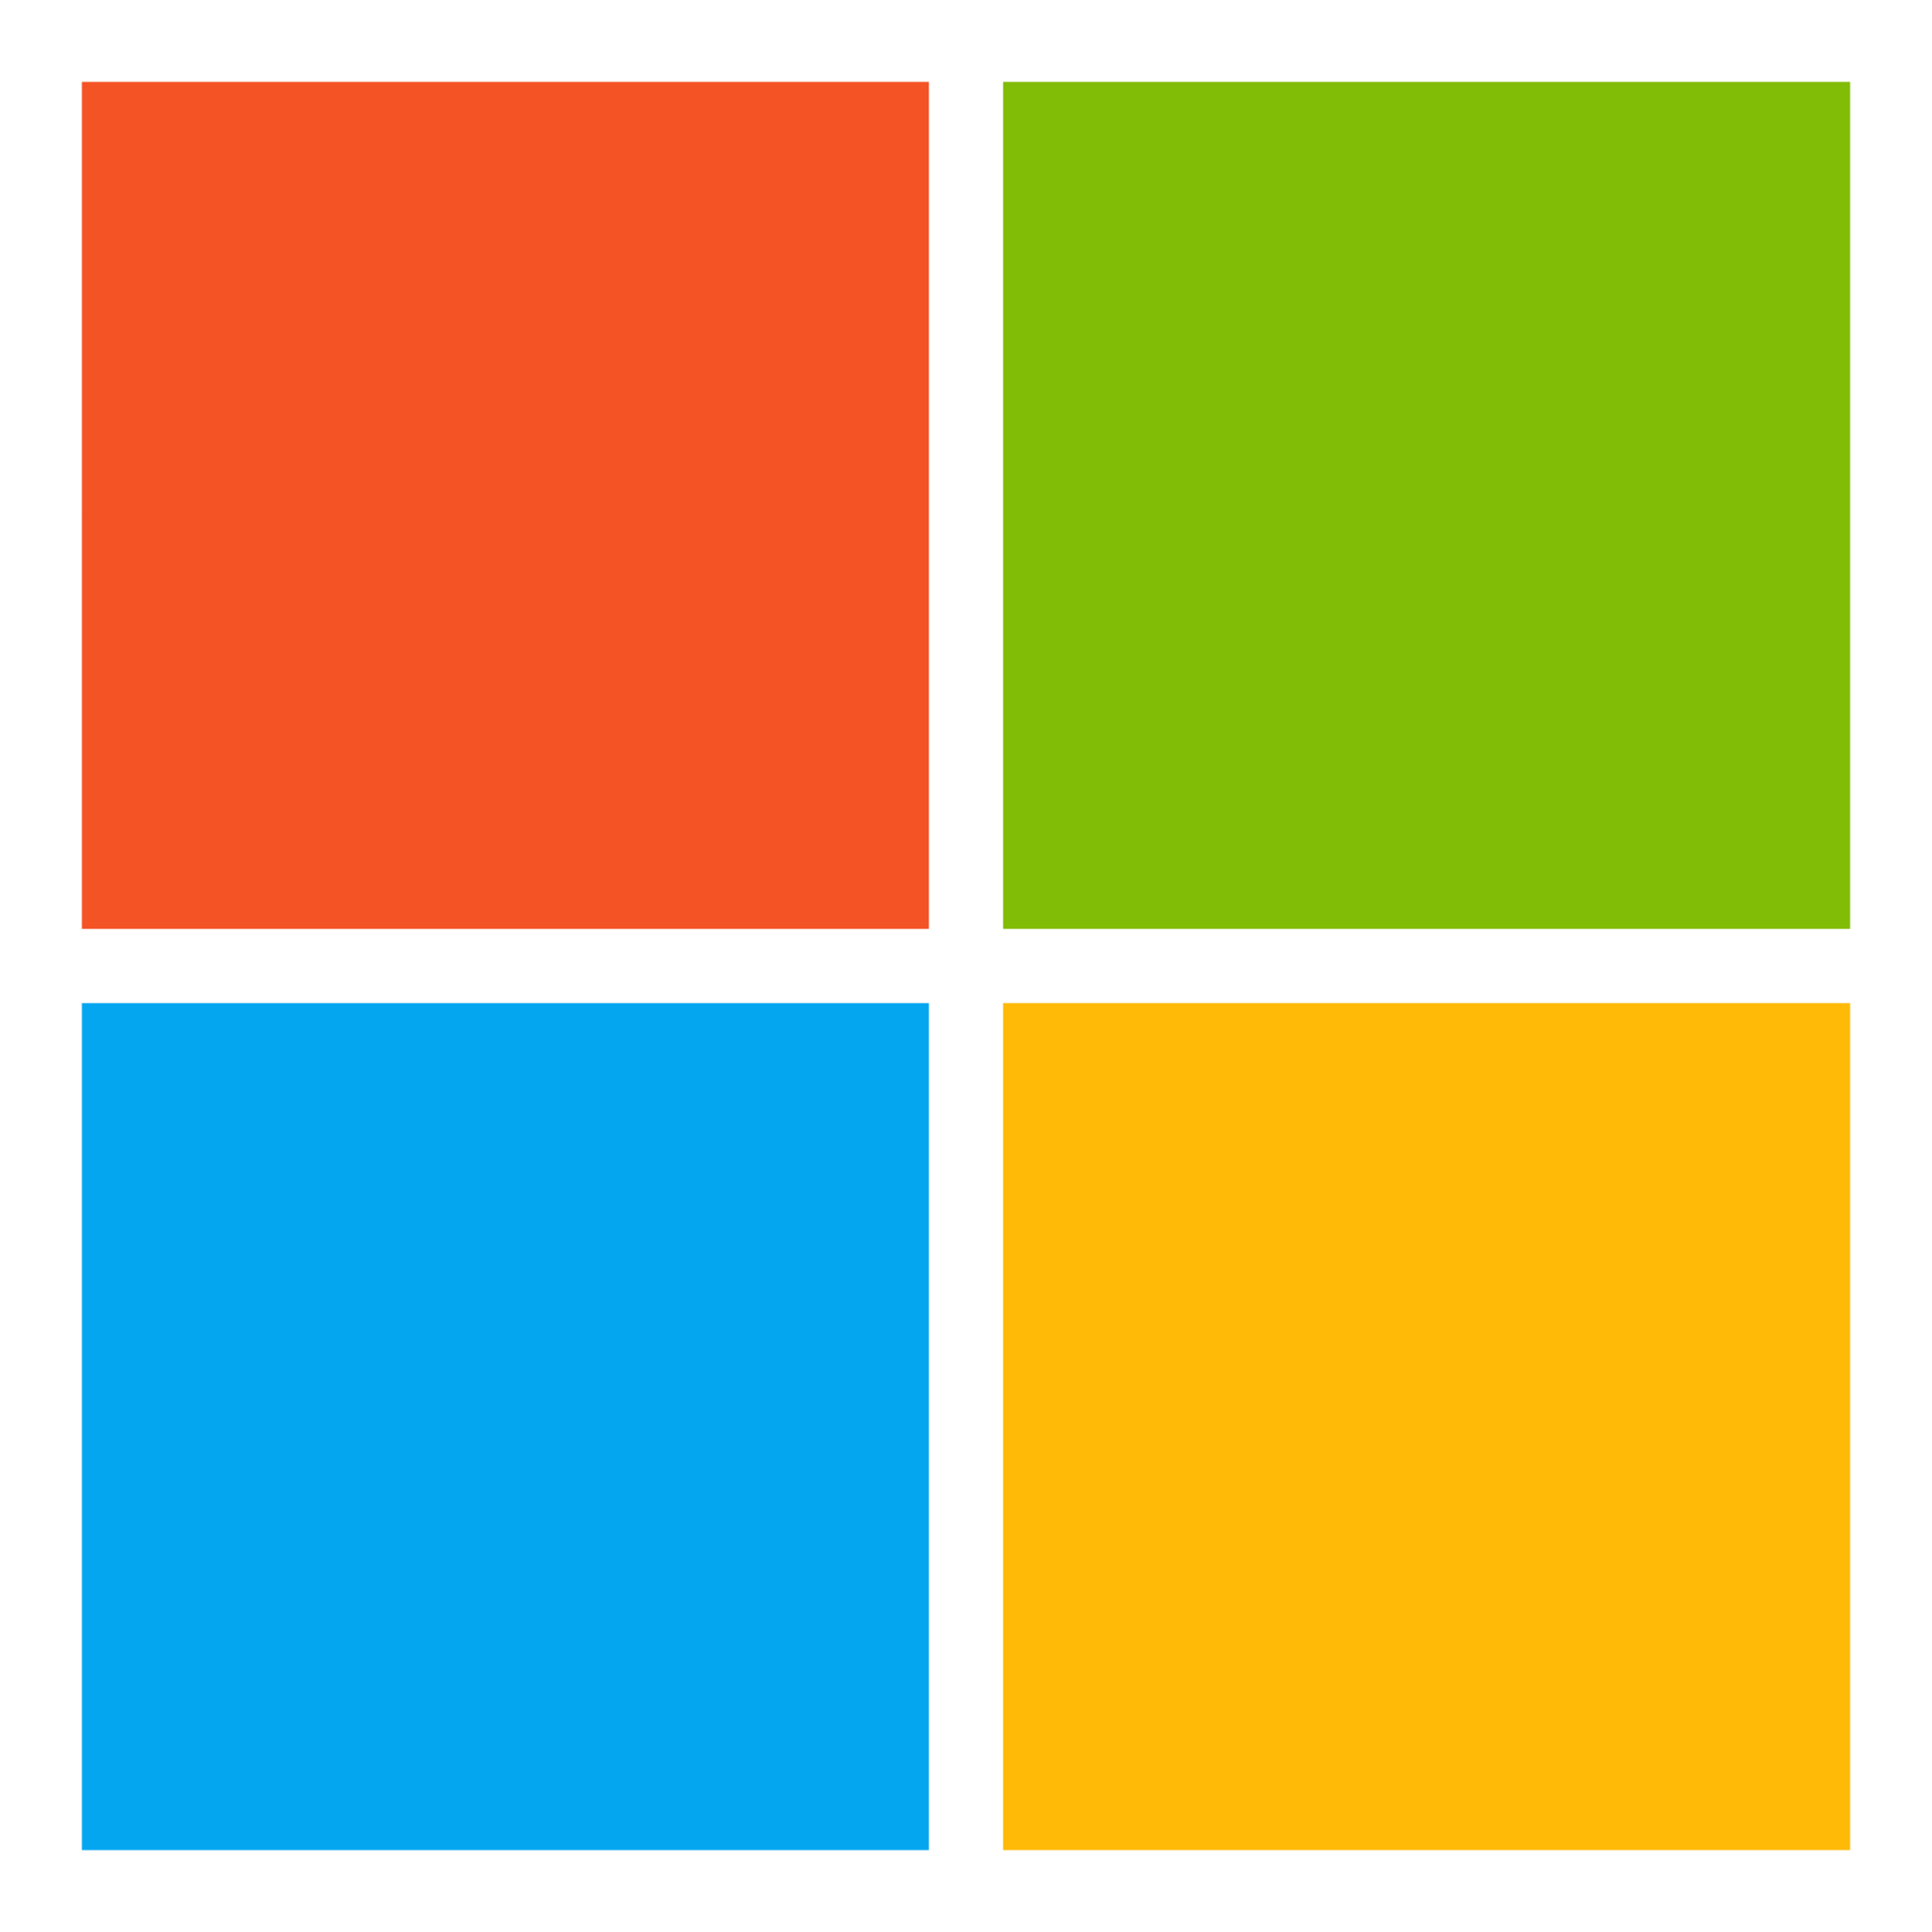 Microsoft Office Png Logo Free Transparent Png Logos